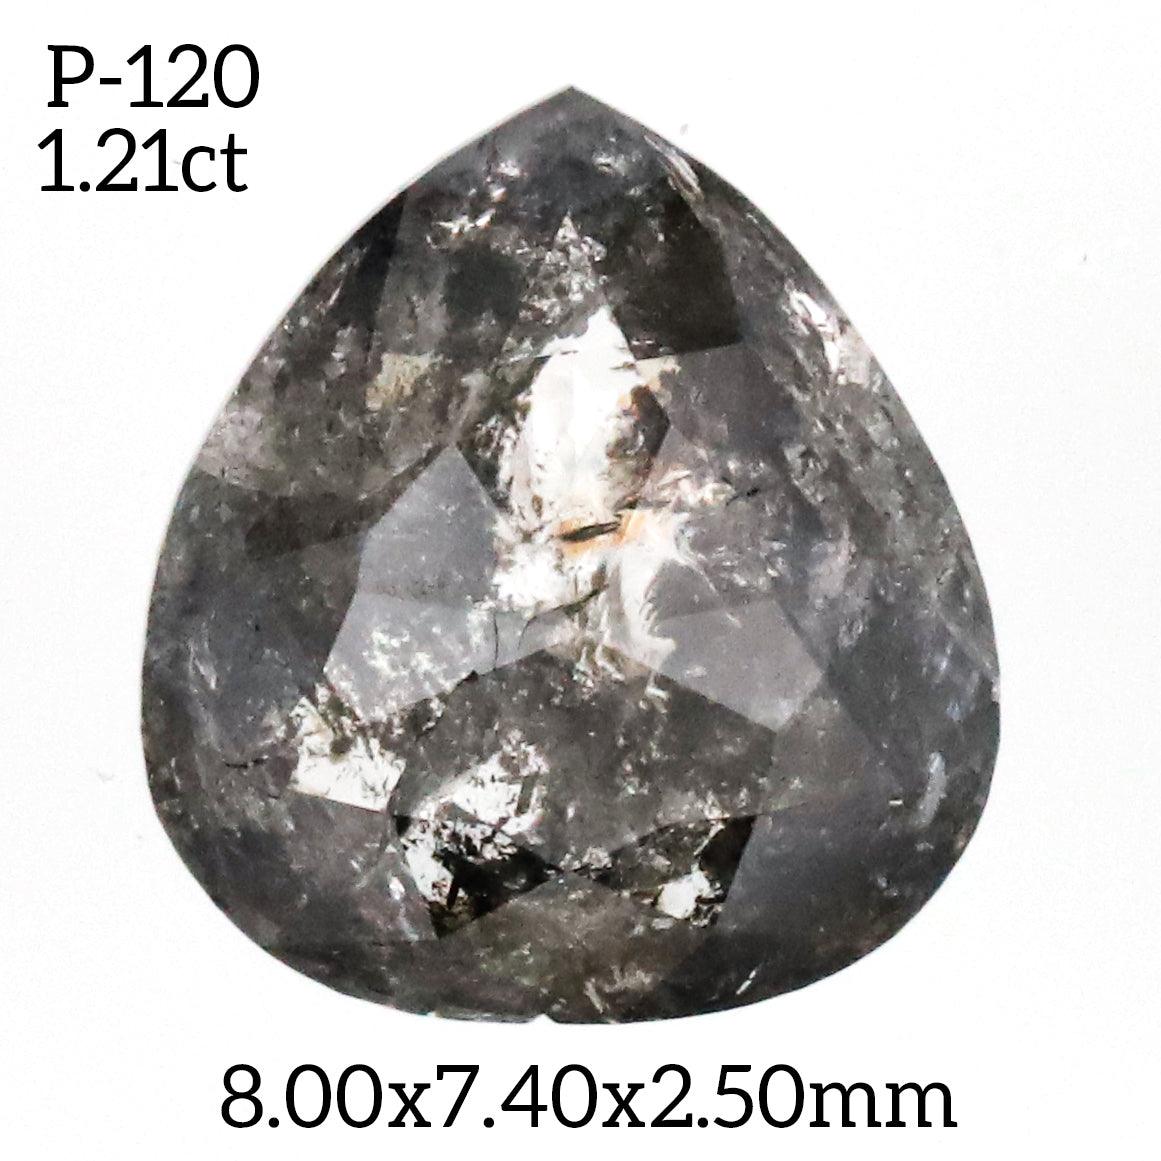 P120 - Salt and pepper pear diamond